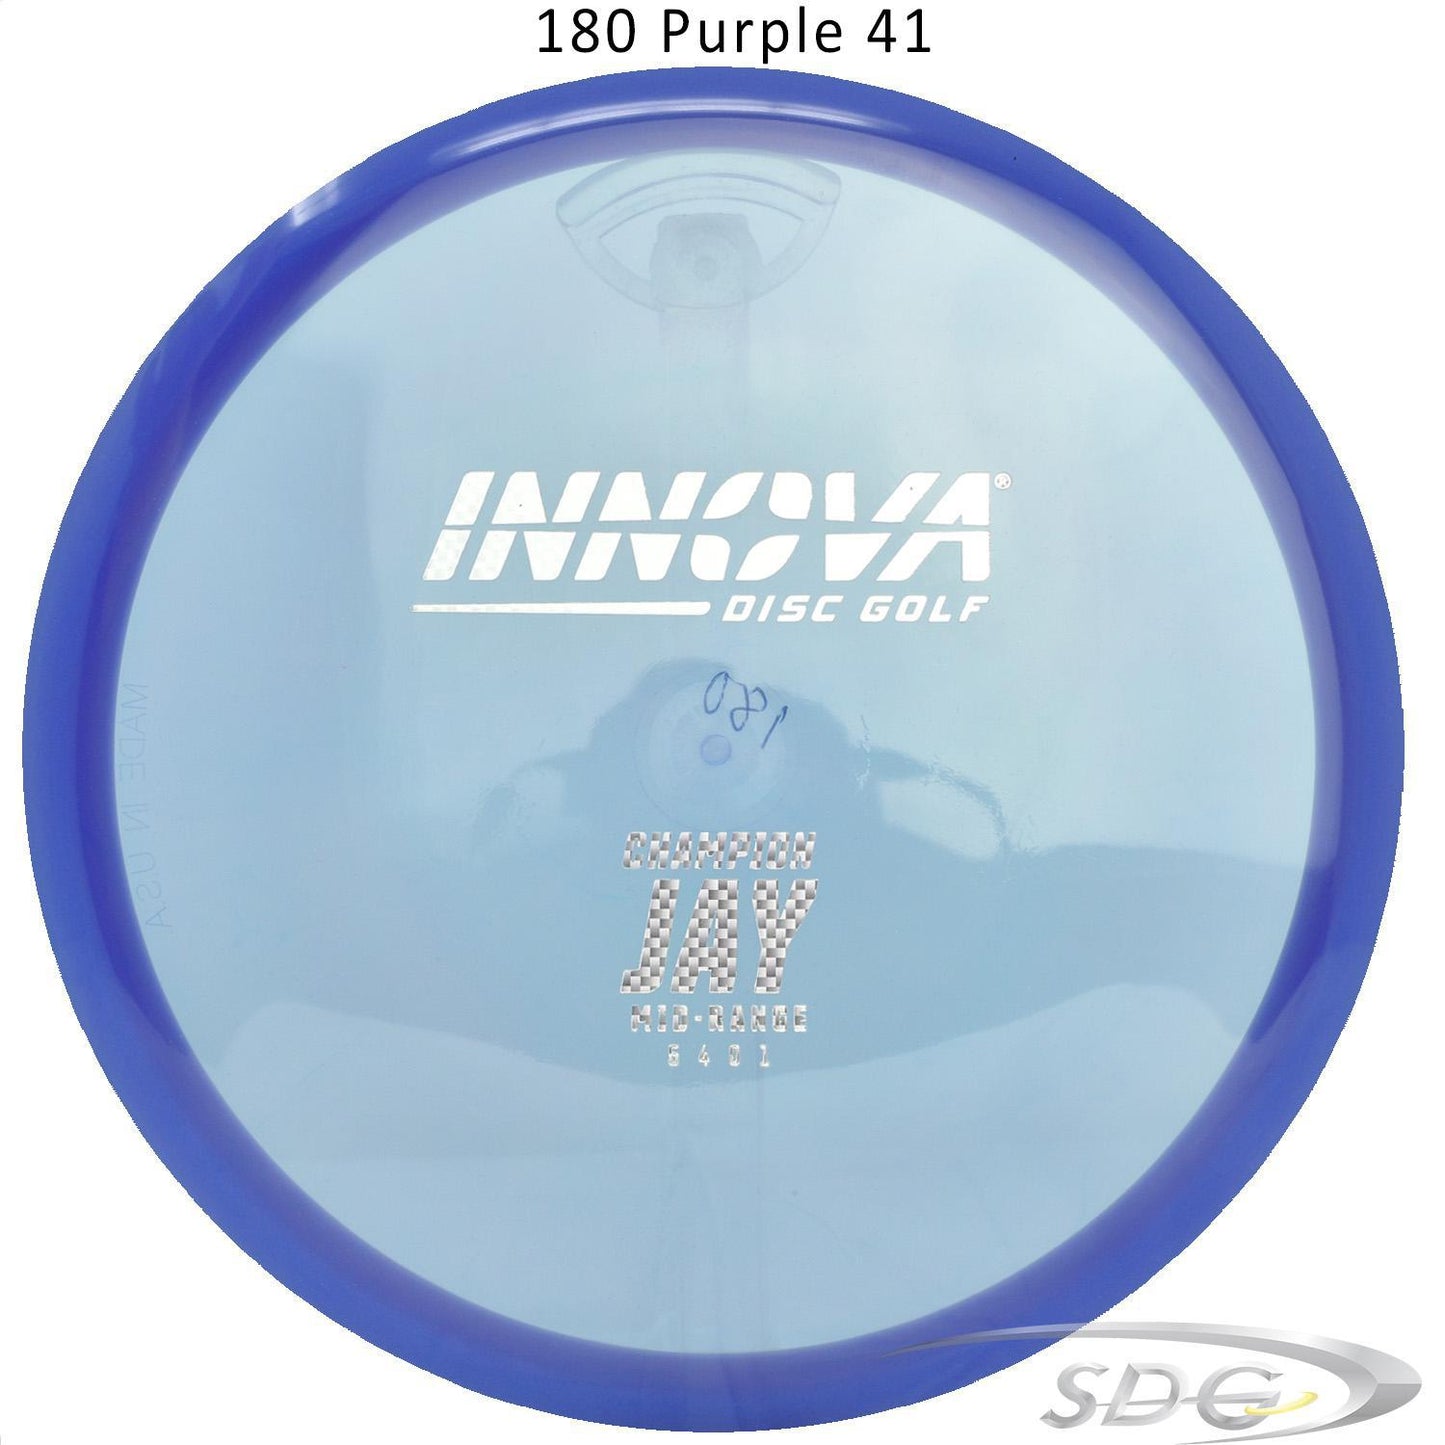 innova-champion-jay-disc-golf-mid-range 180 Purple 41 